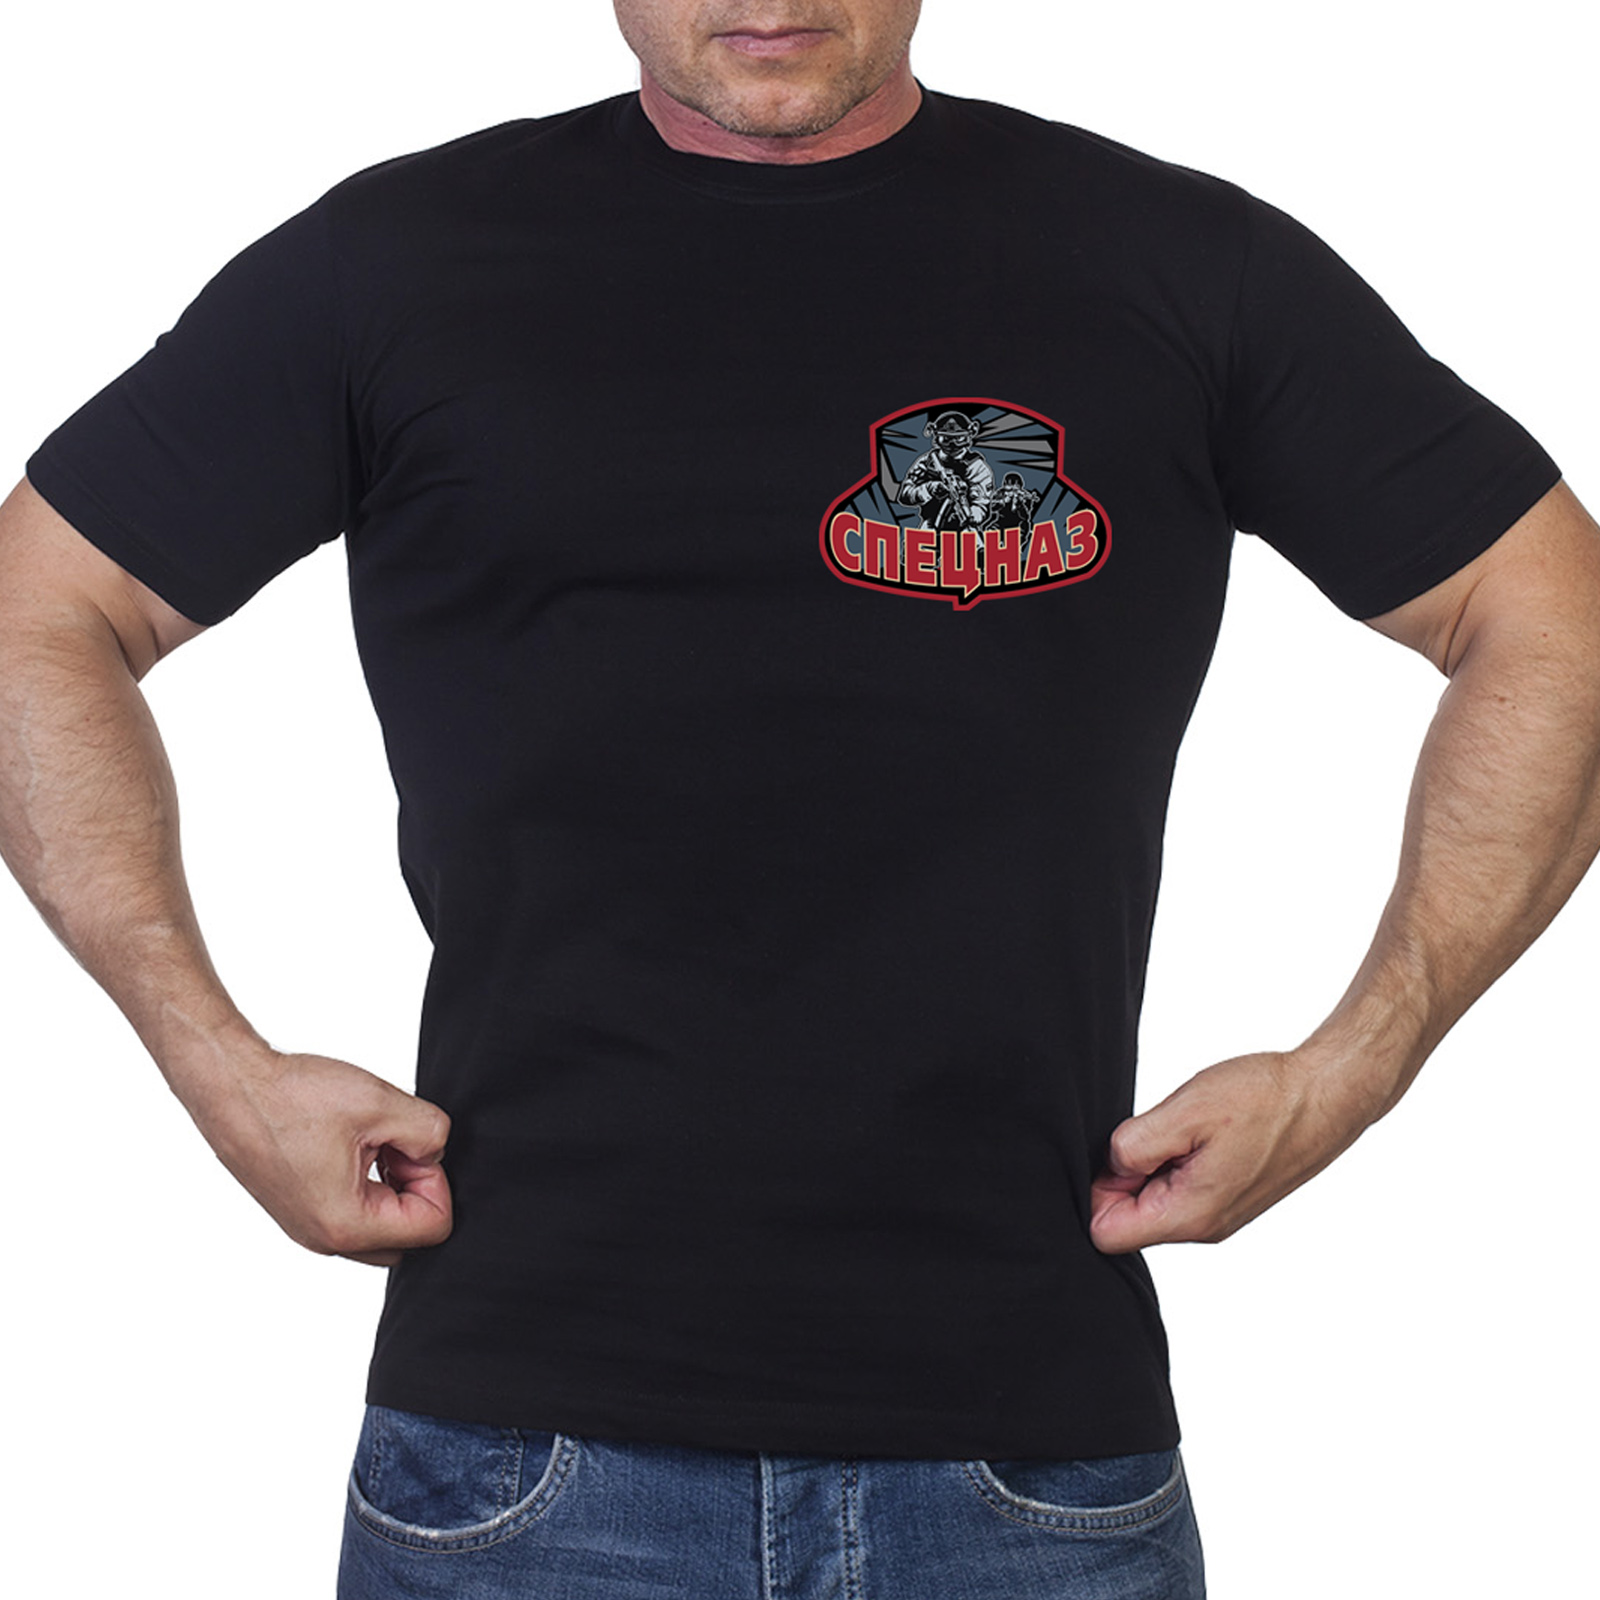 Мужская футболка с надписью «Спецназ»